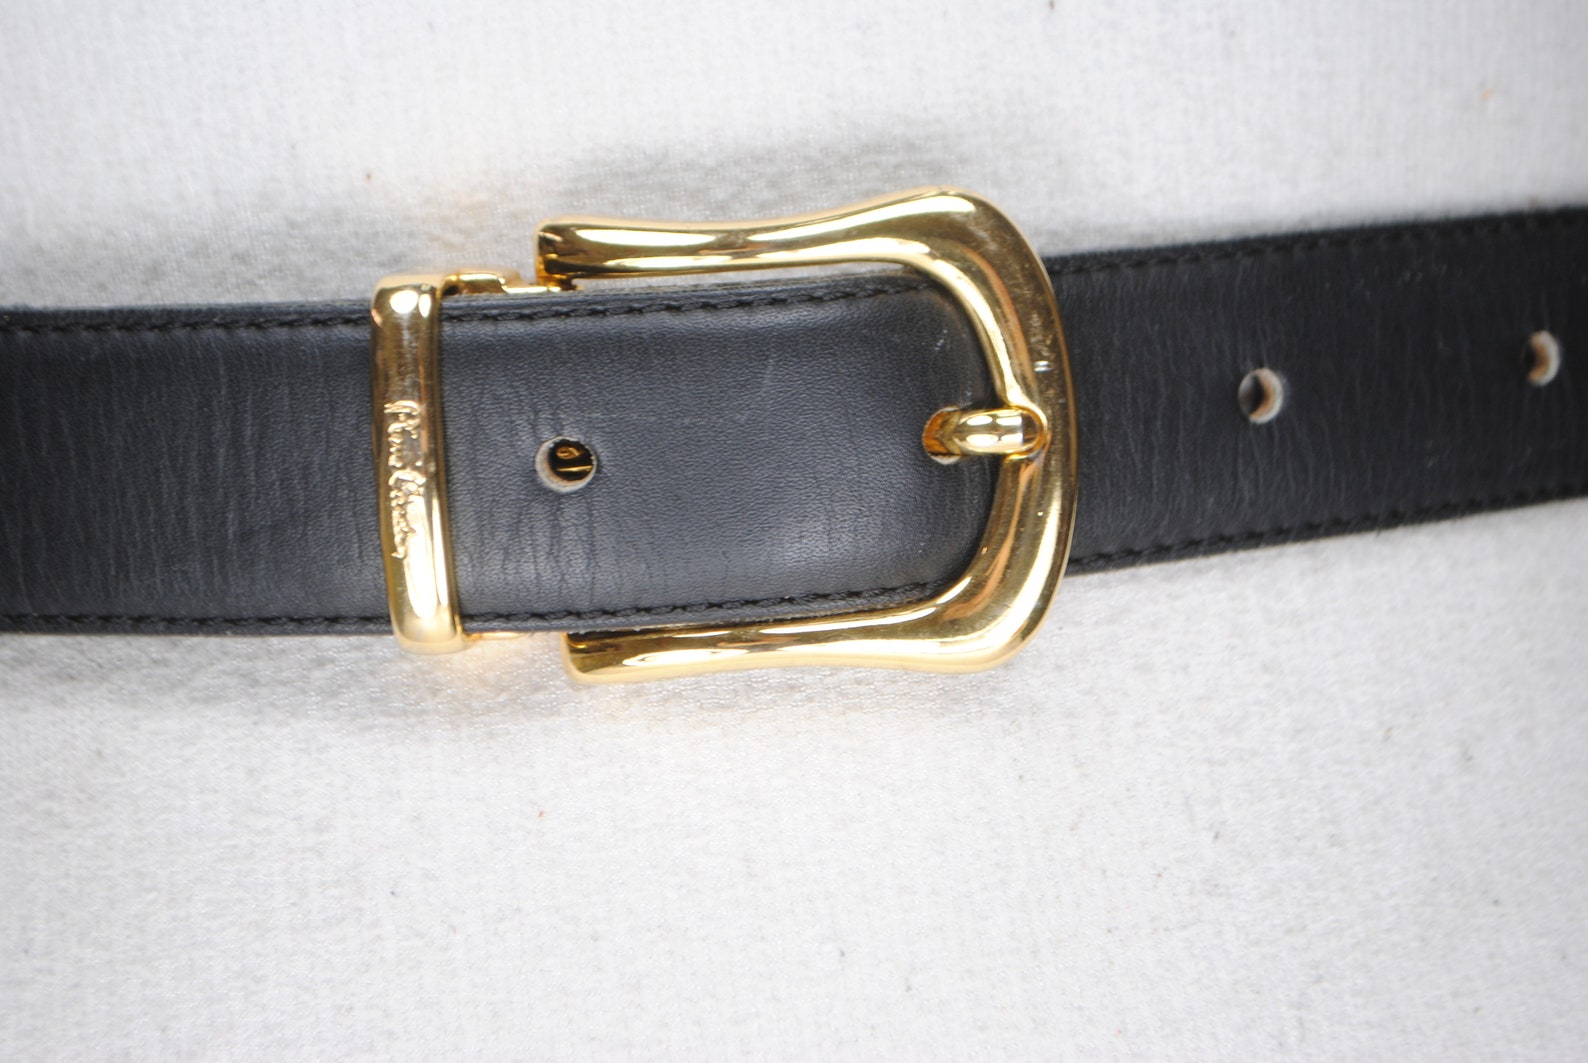 Pierre Cardin belt Black Leather Belt with Gold Buckle | Etsy